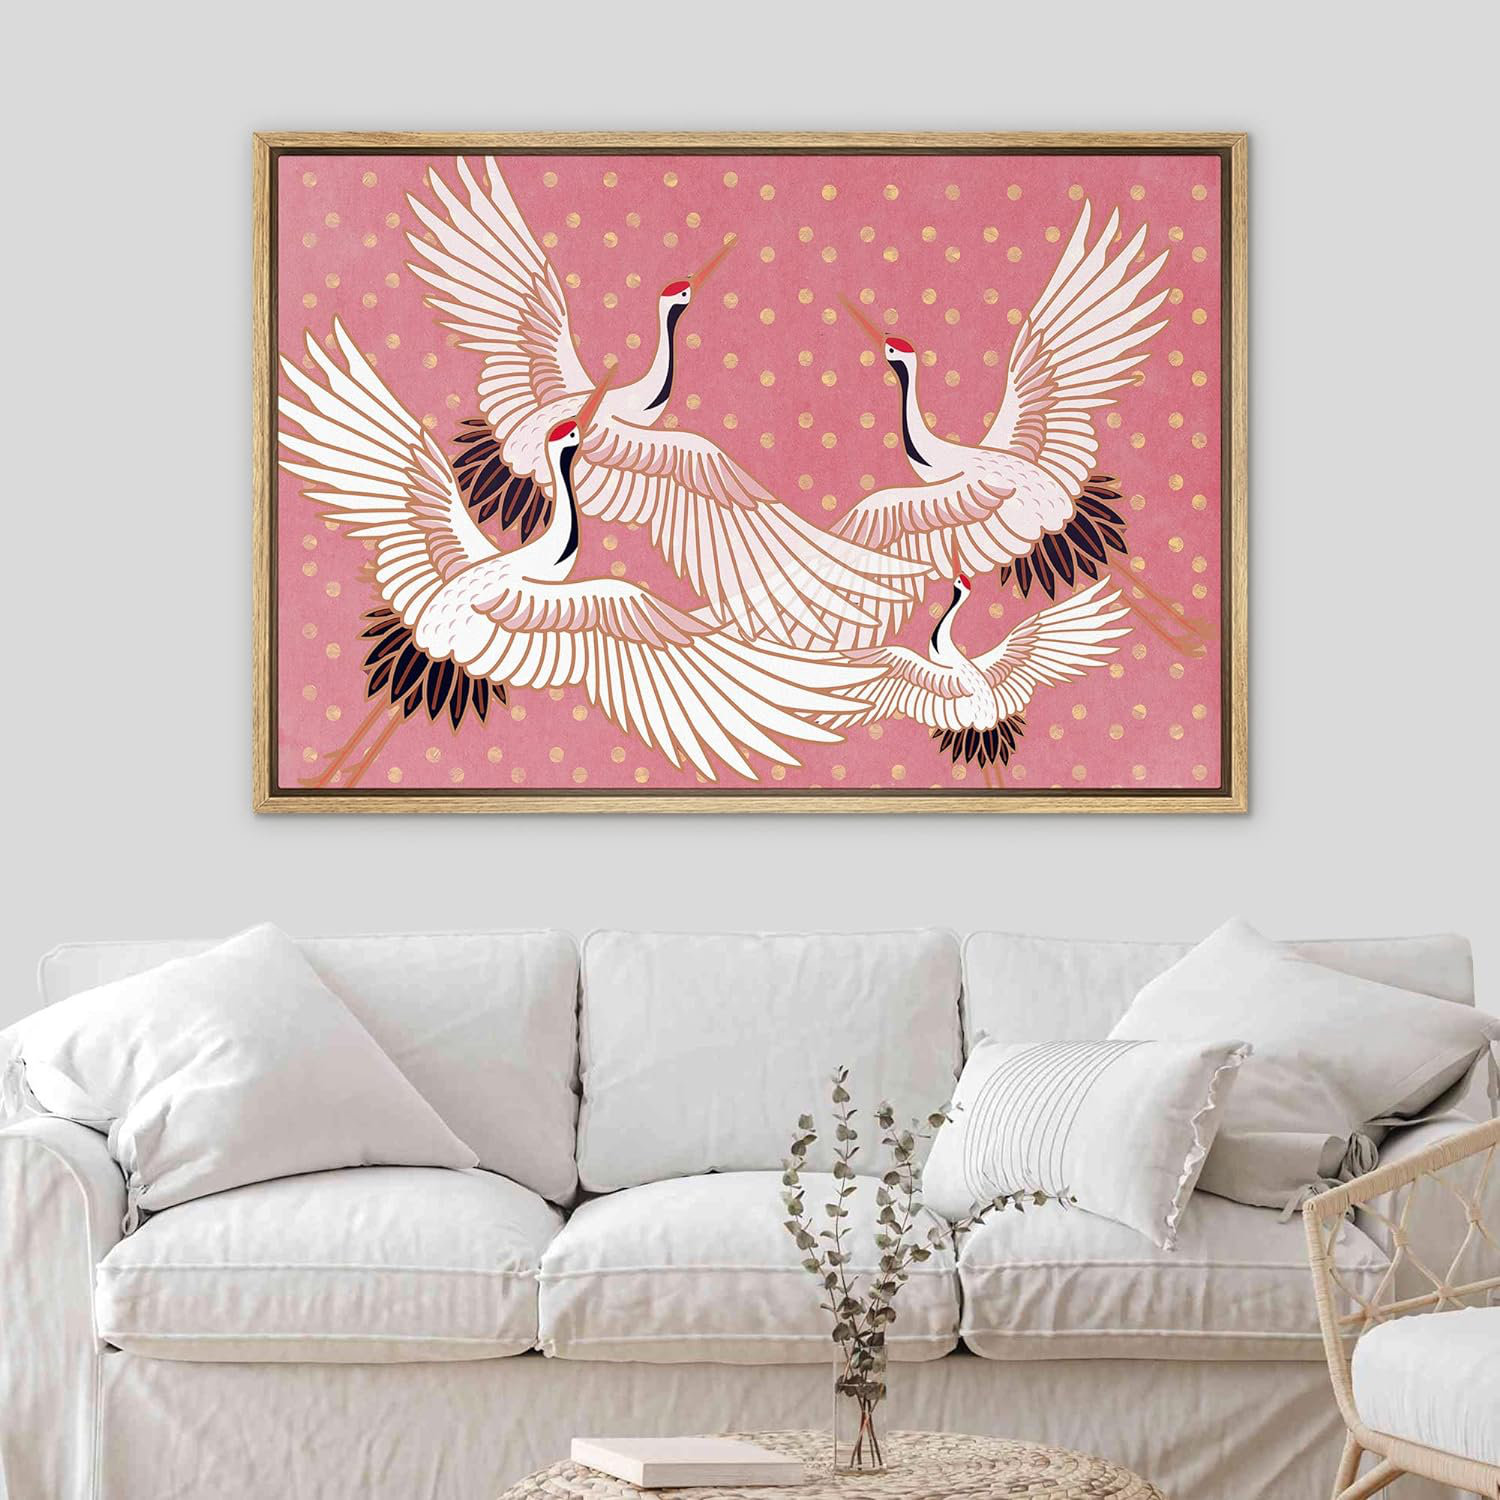 IDEA4WALL Framed Canvas Print Wall Art Preppy Room Decor Crane Bird Pattern Pink Polka Dot Animals Nature Decorative Multicolor Colorful Rustic for Li